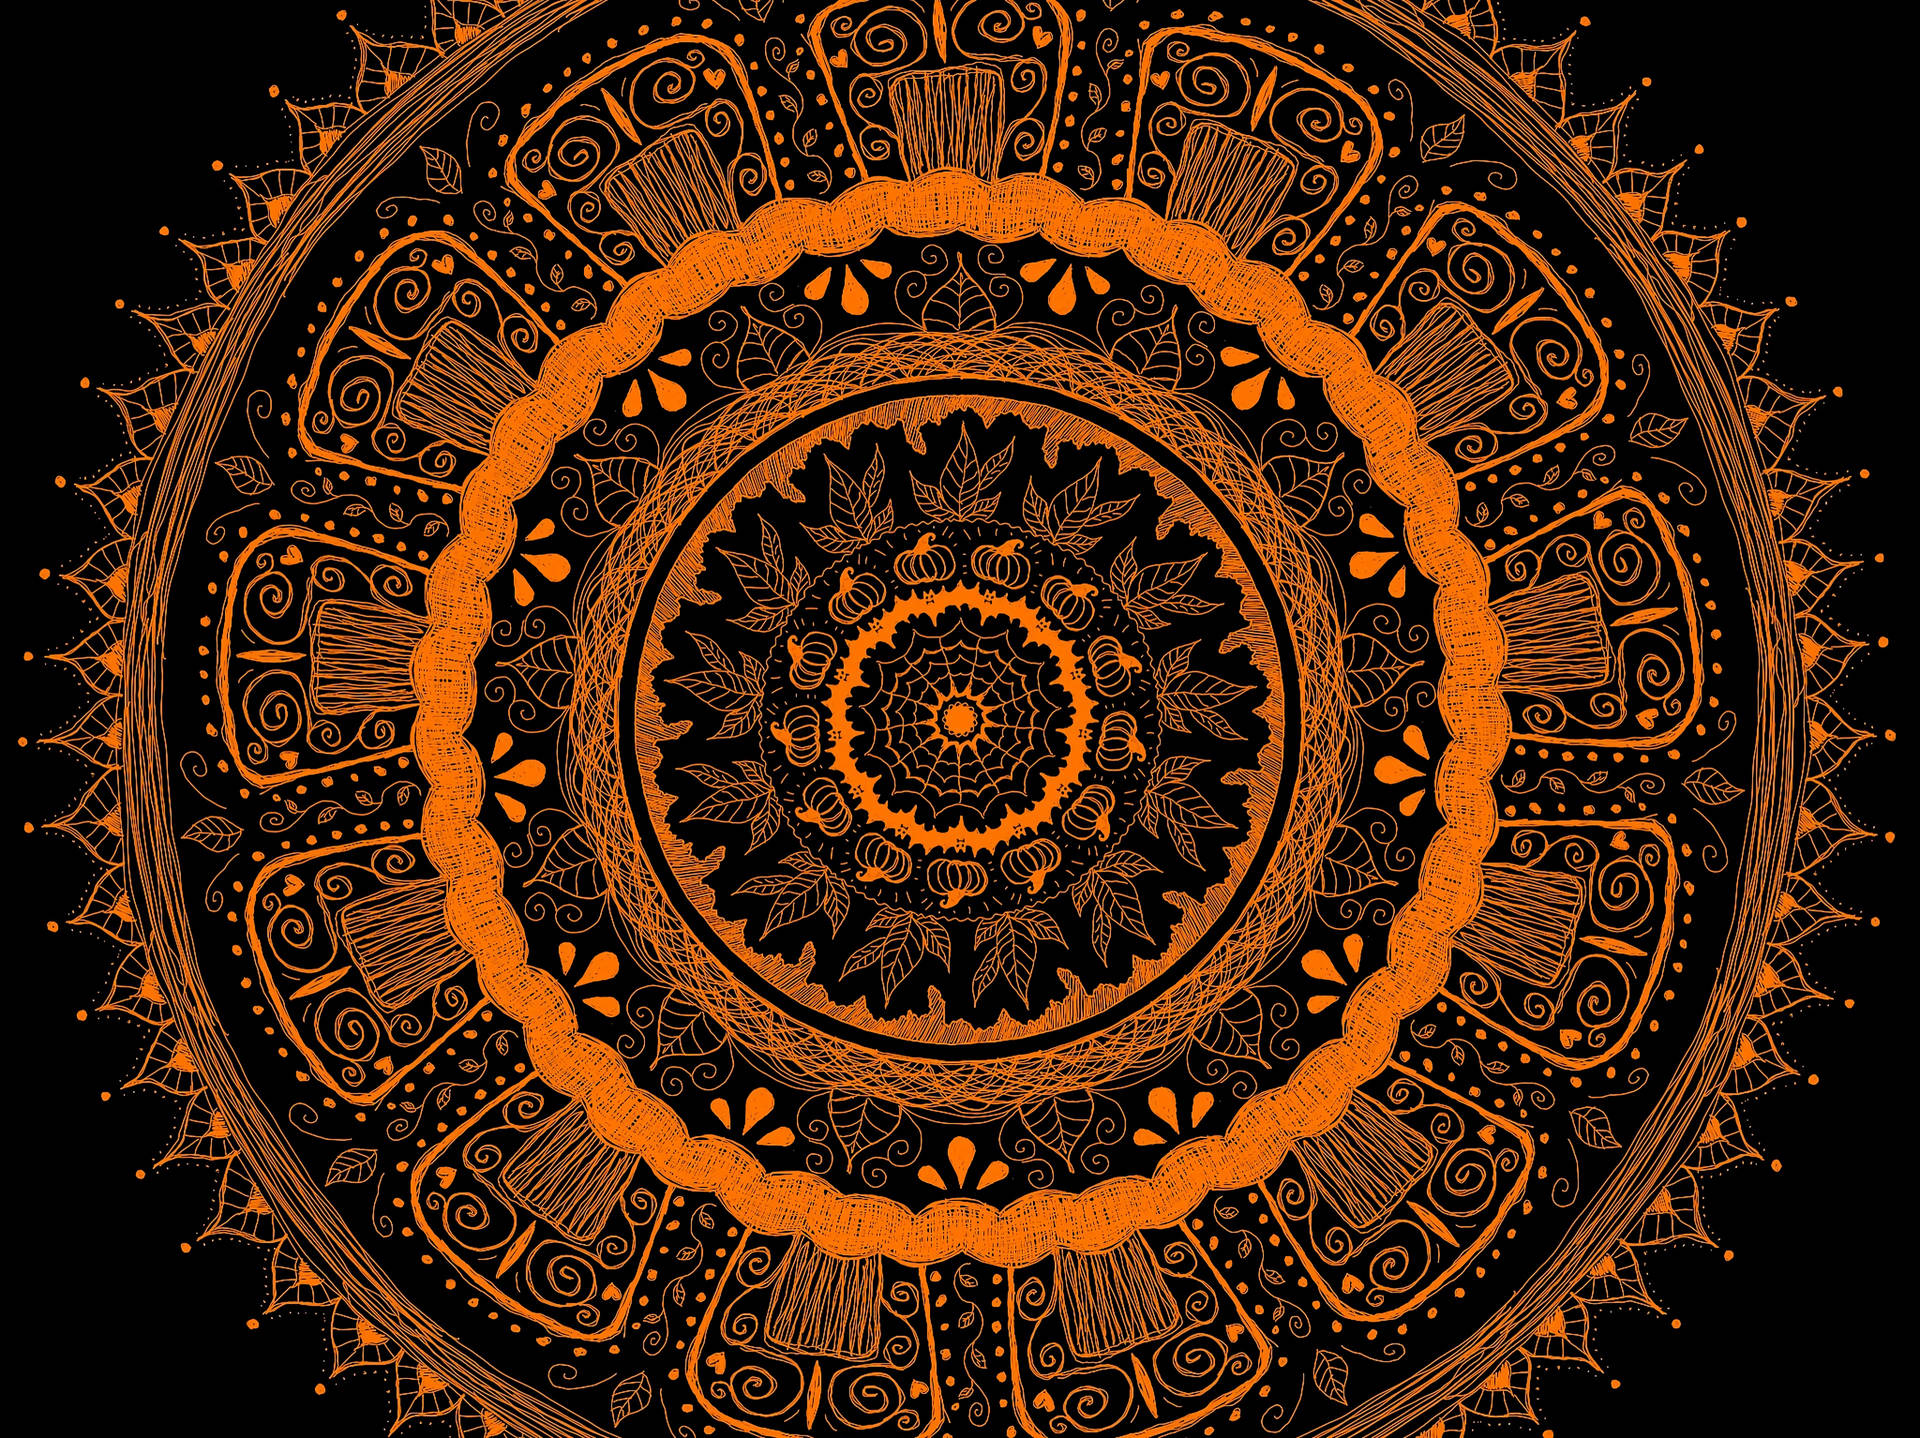 Mandala 3840X2876 Wallpaper and Background Image